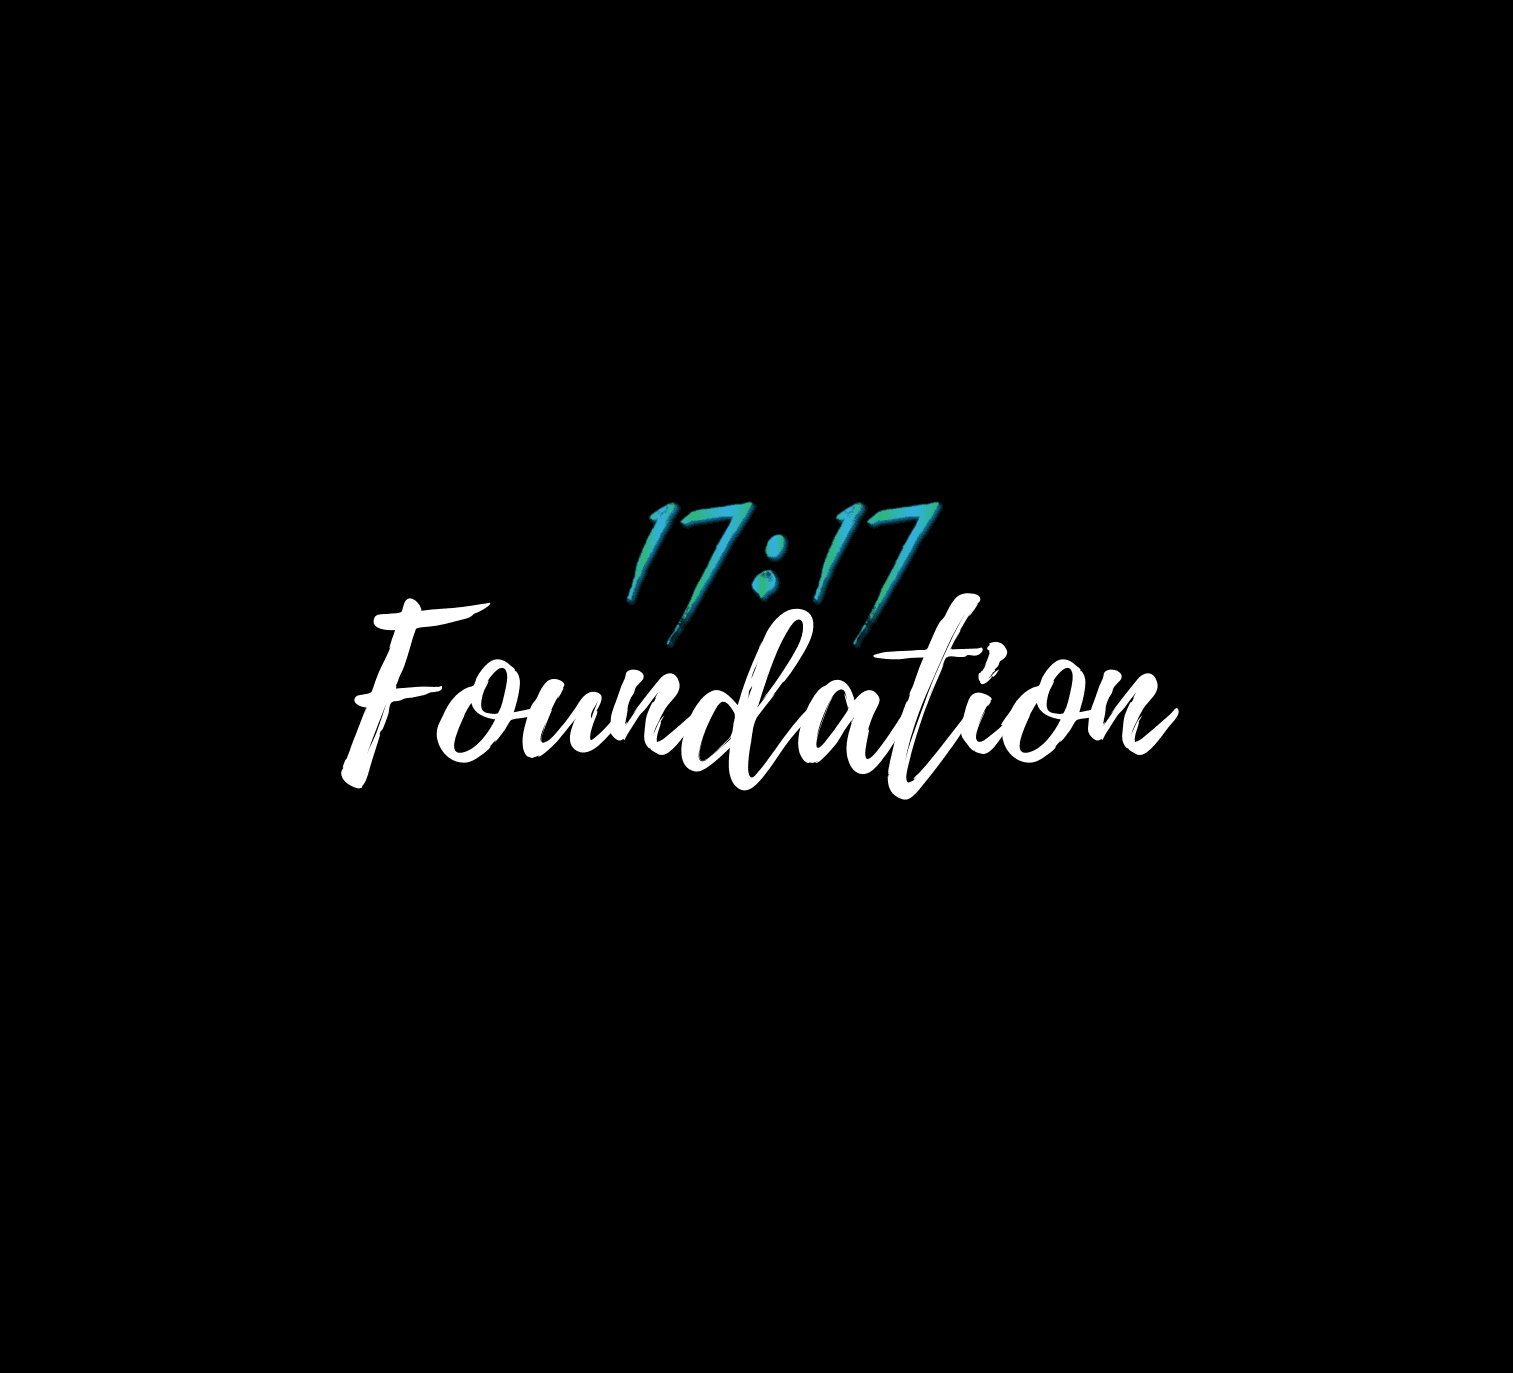 17:17 Foundation